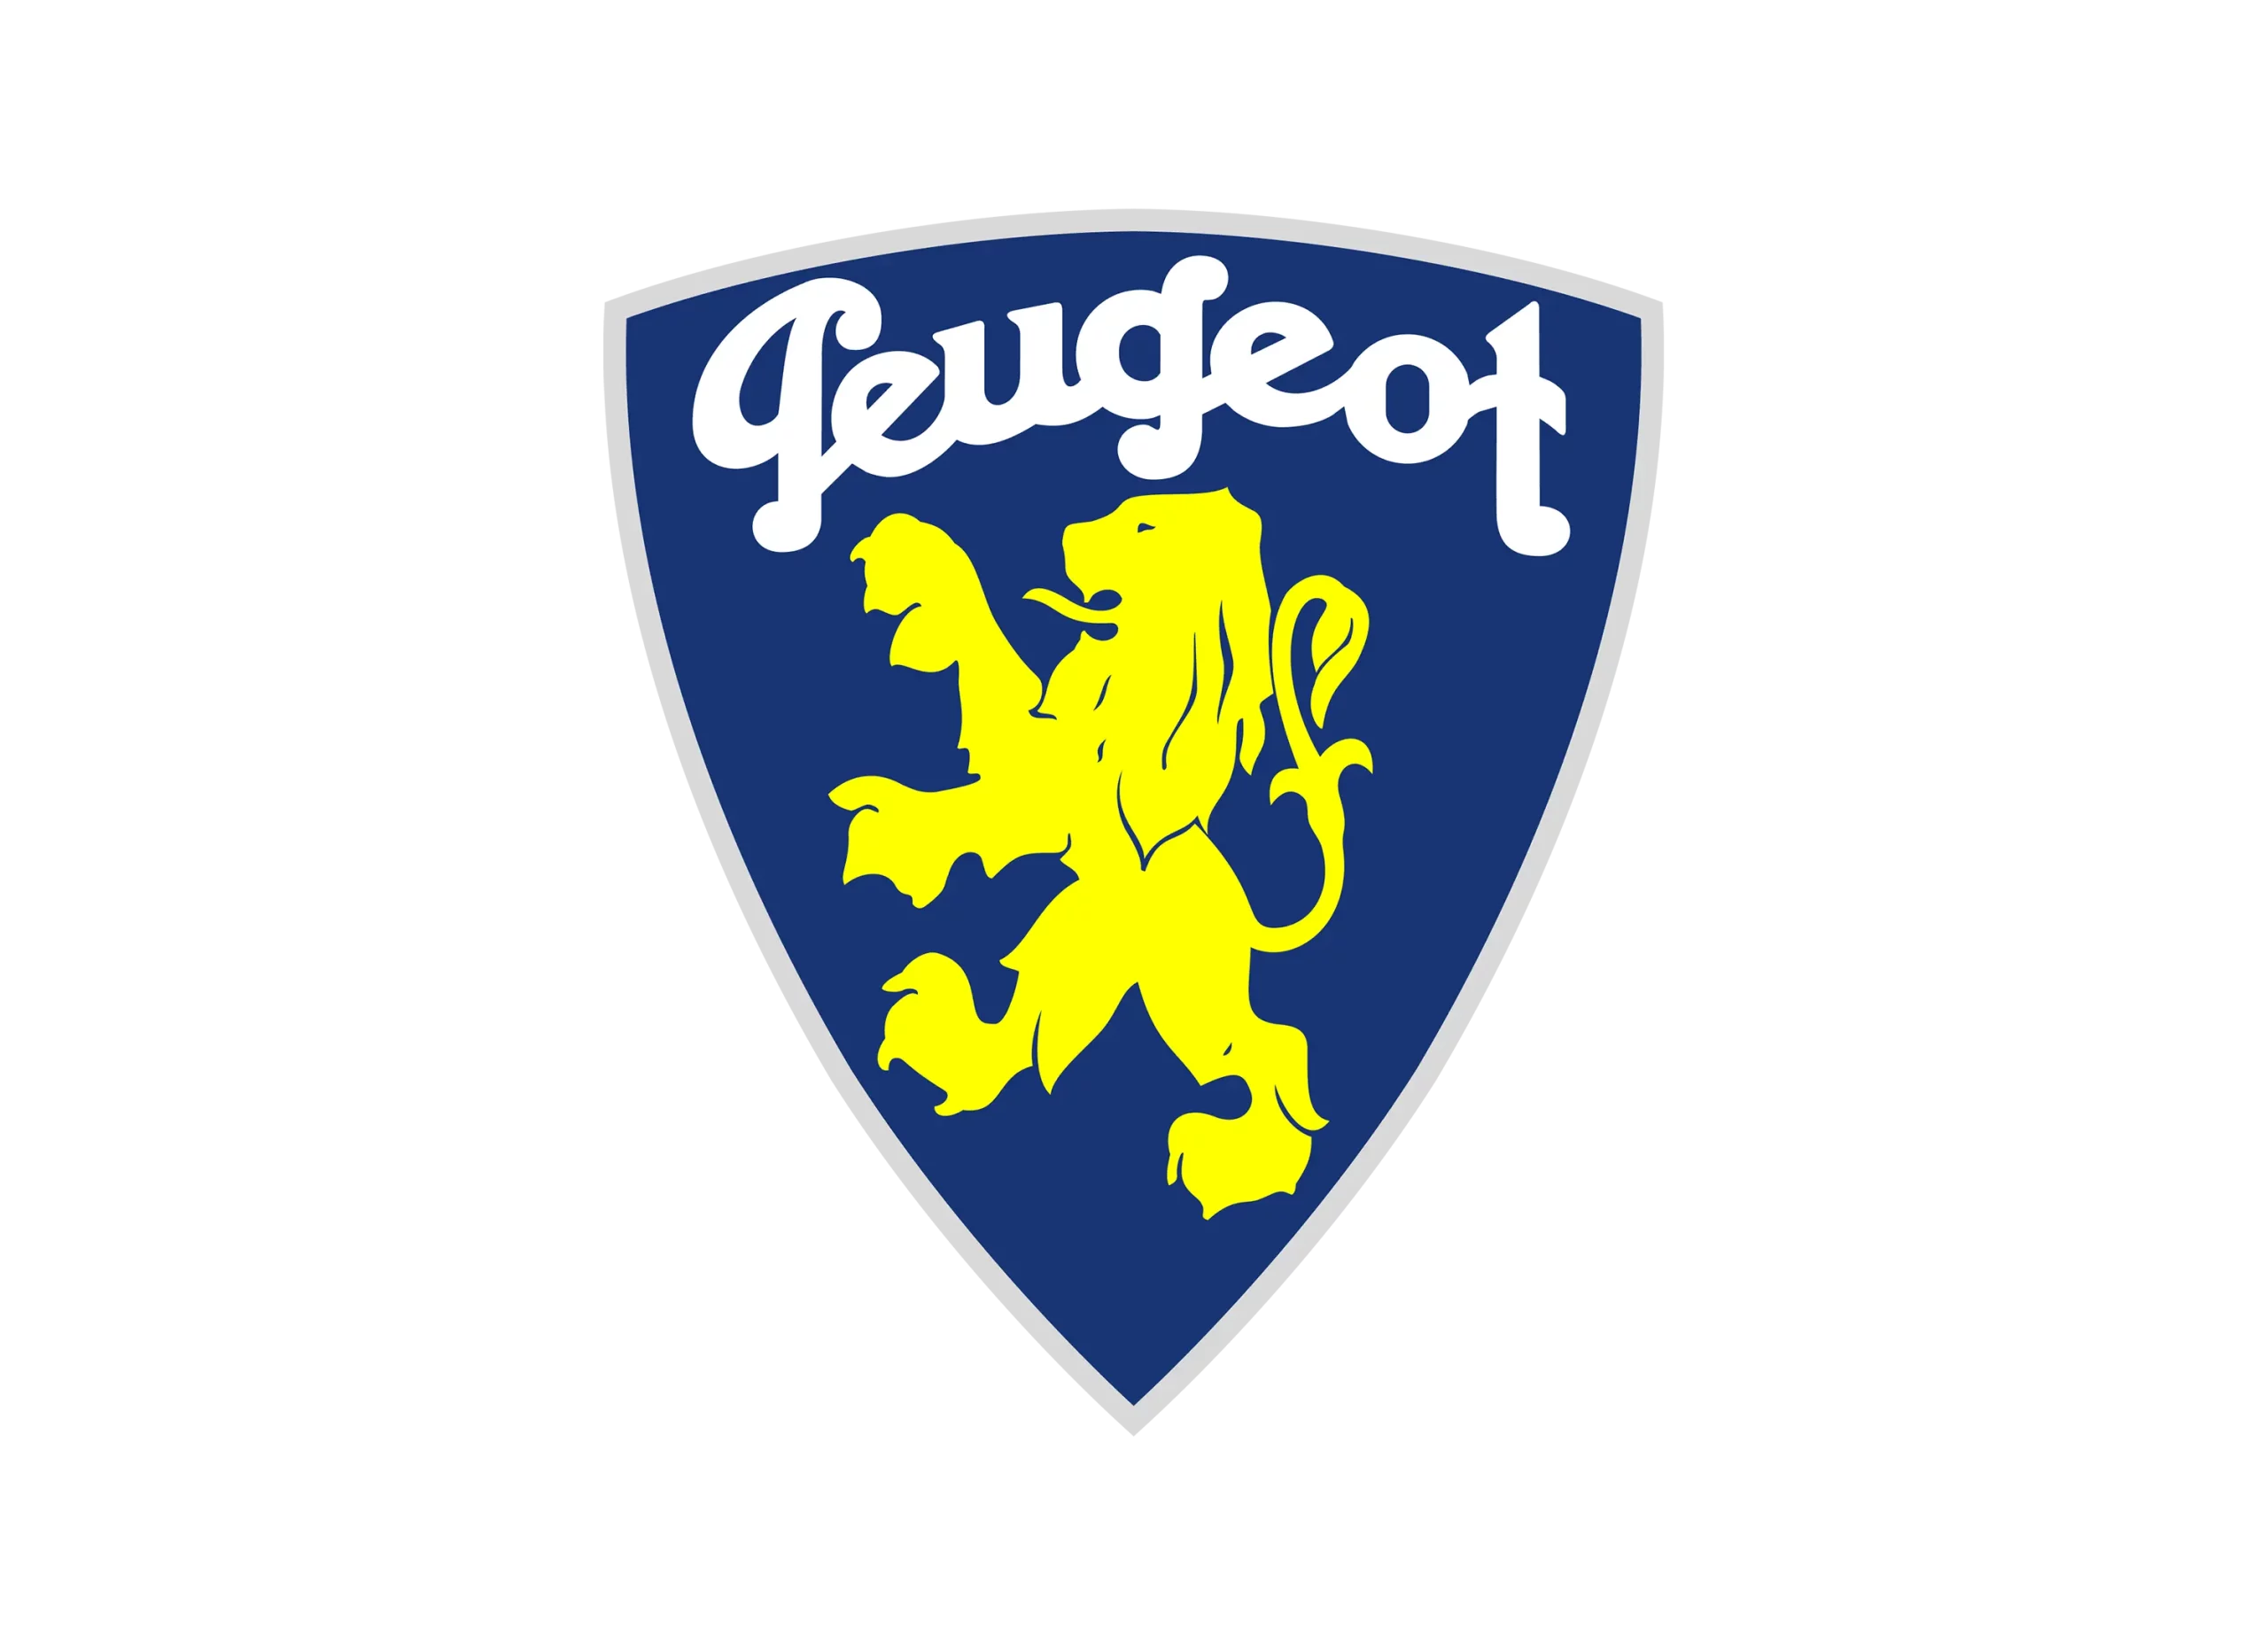 Peugeot logo 1970-1975